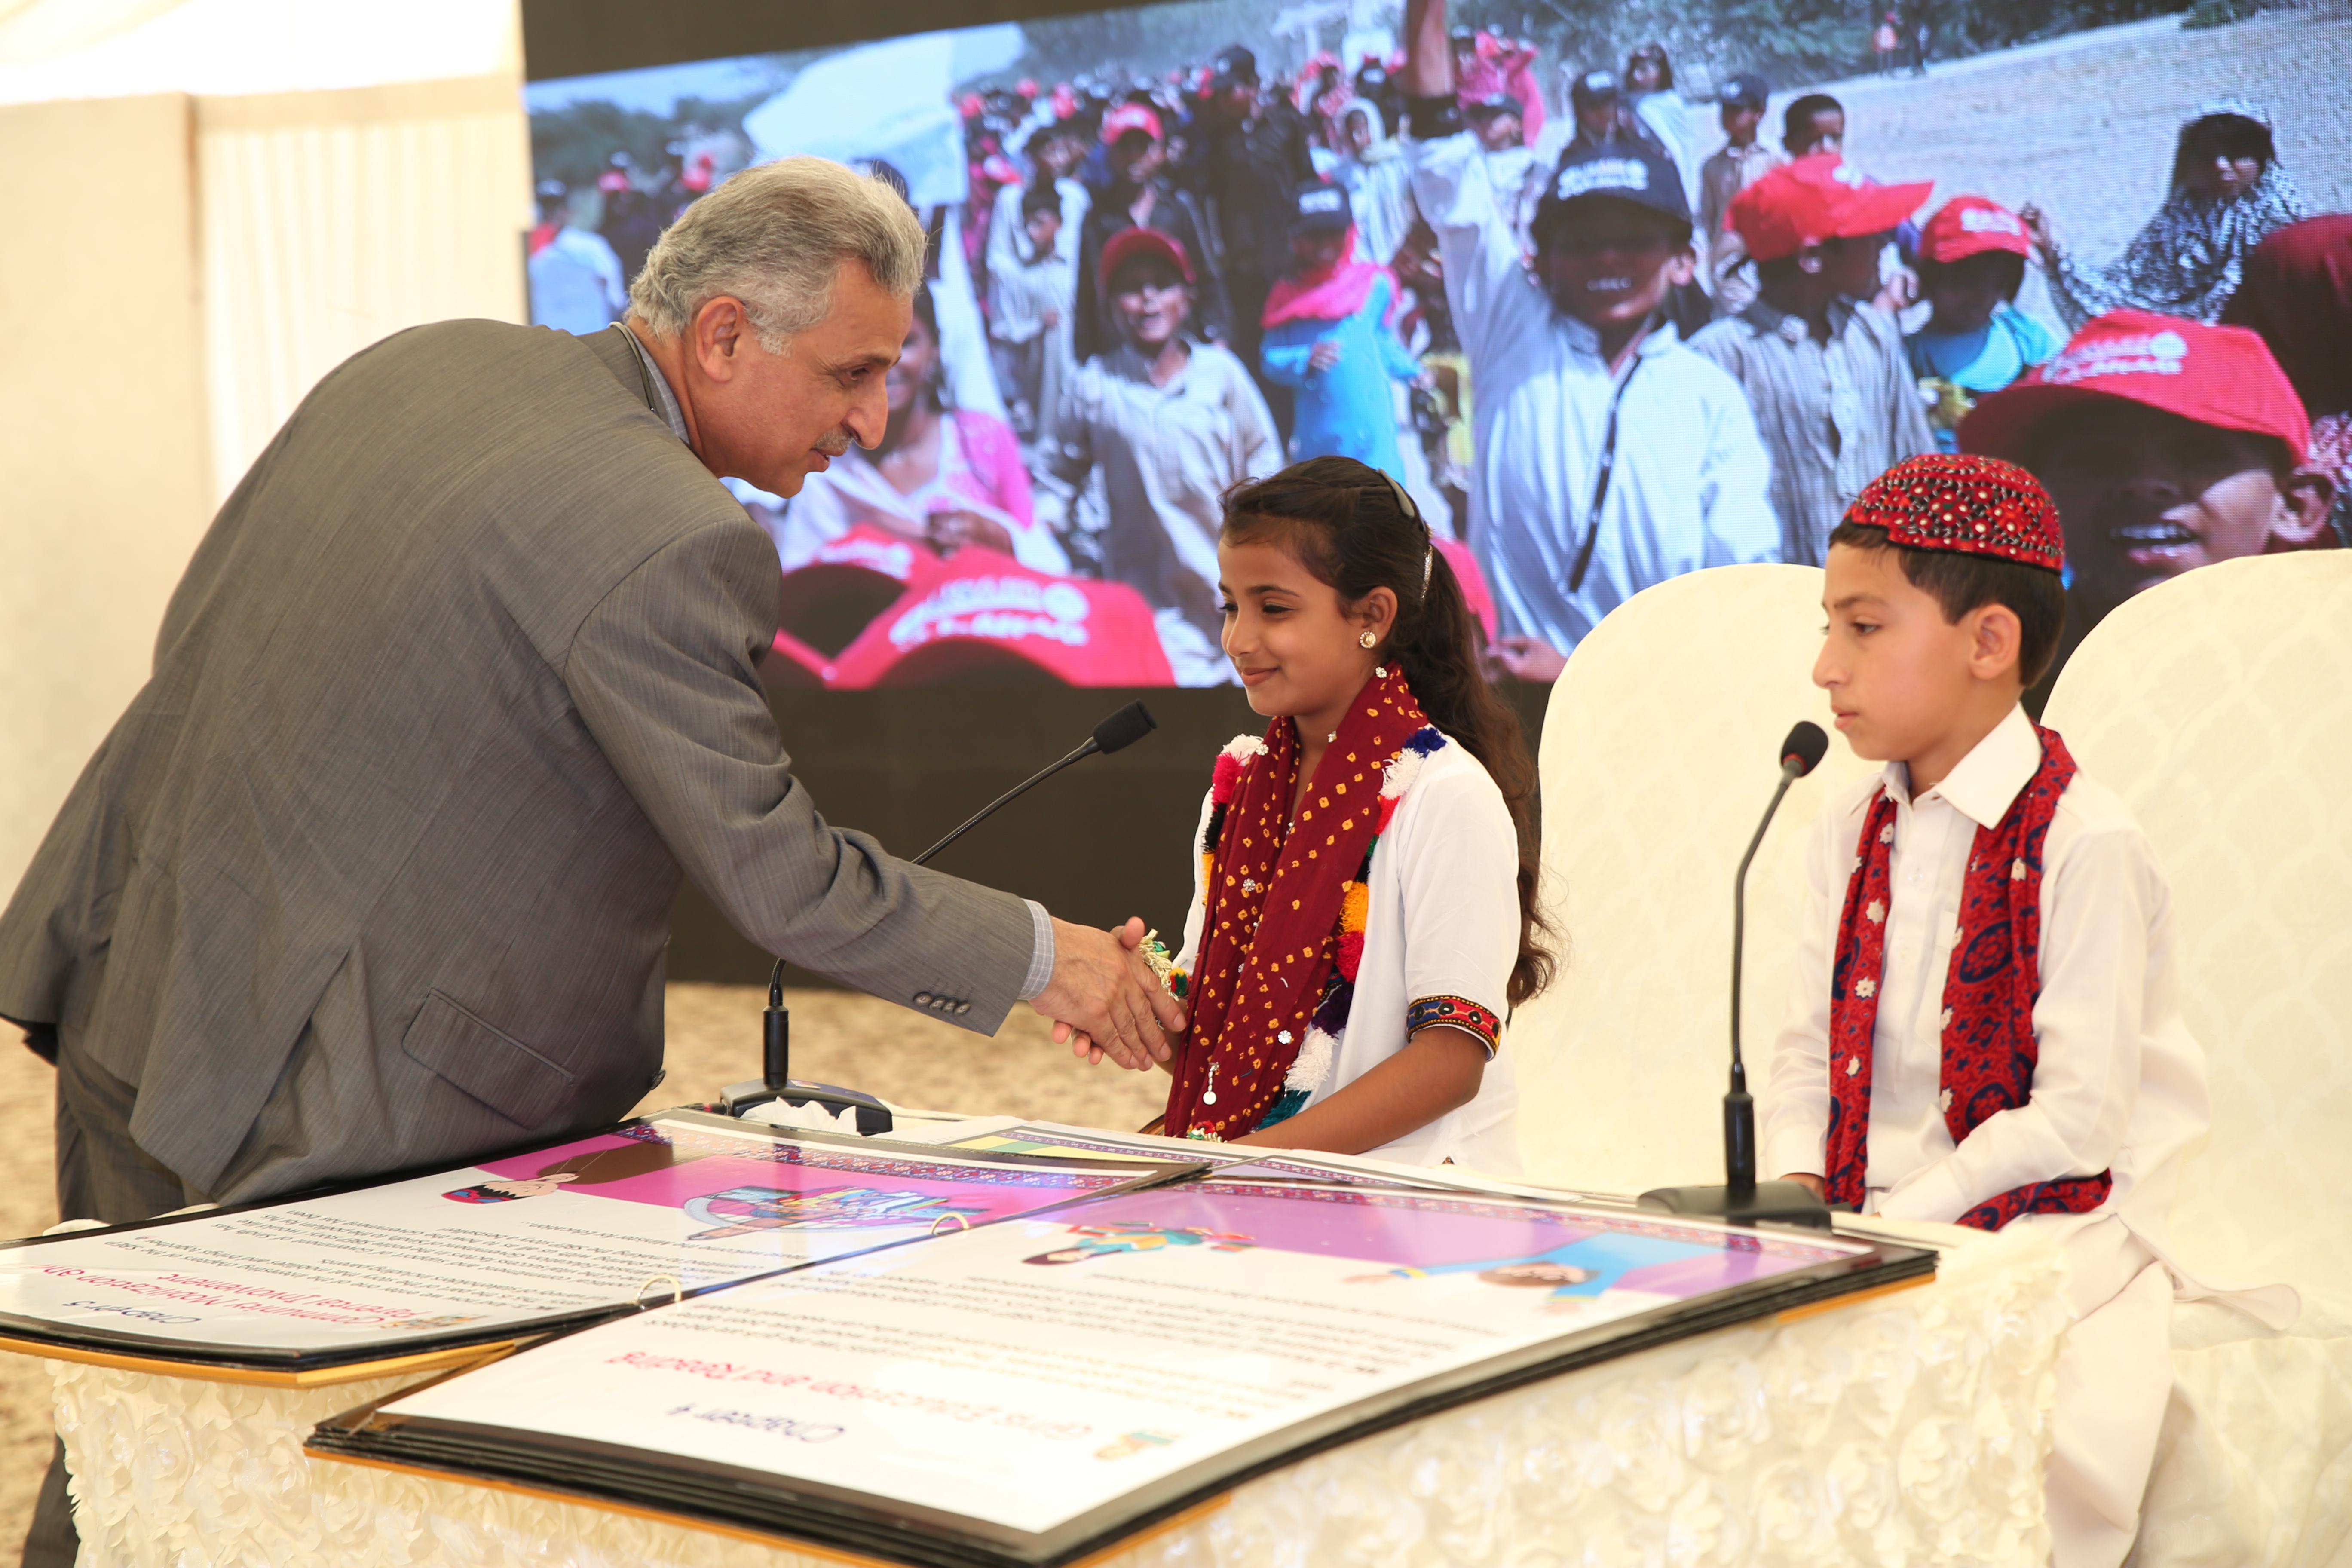 School Groundbreaking Ceremony in Pakistan a Great Success